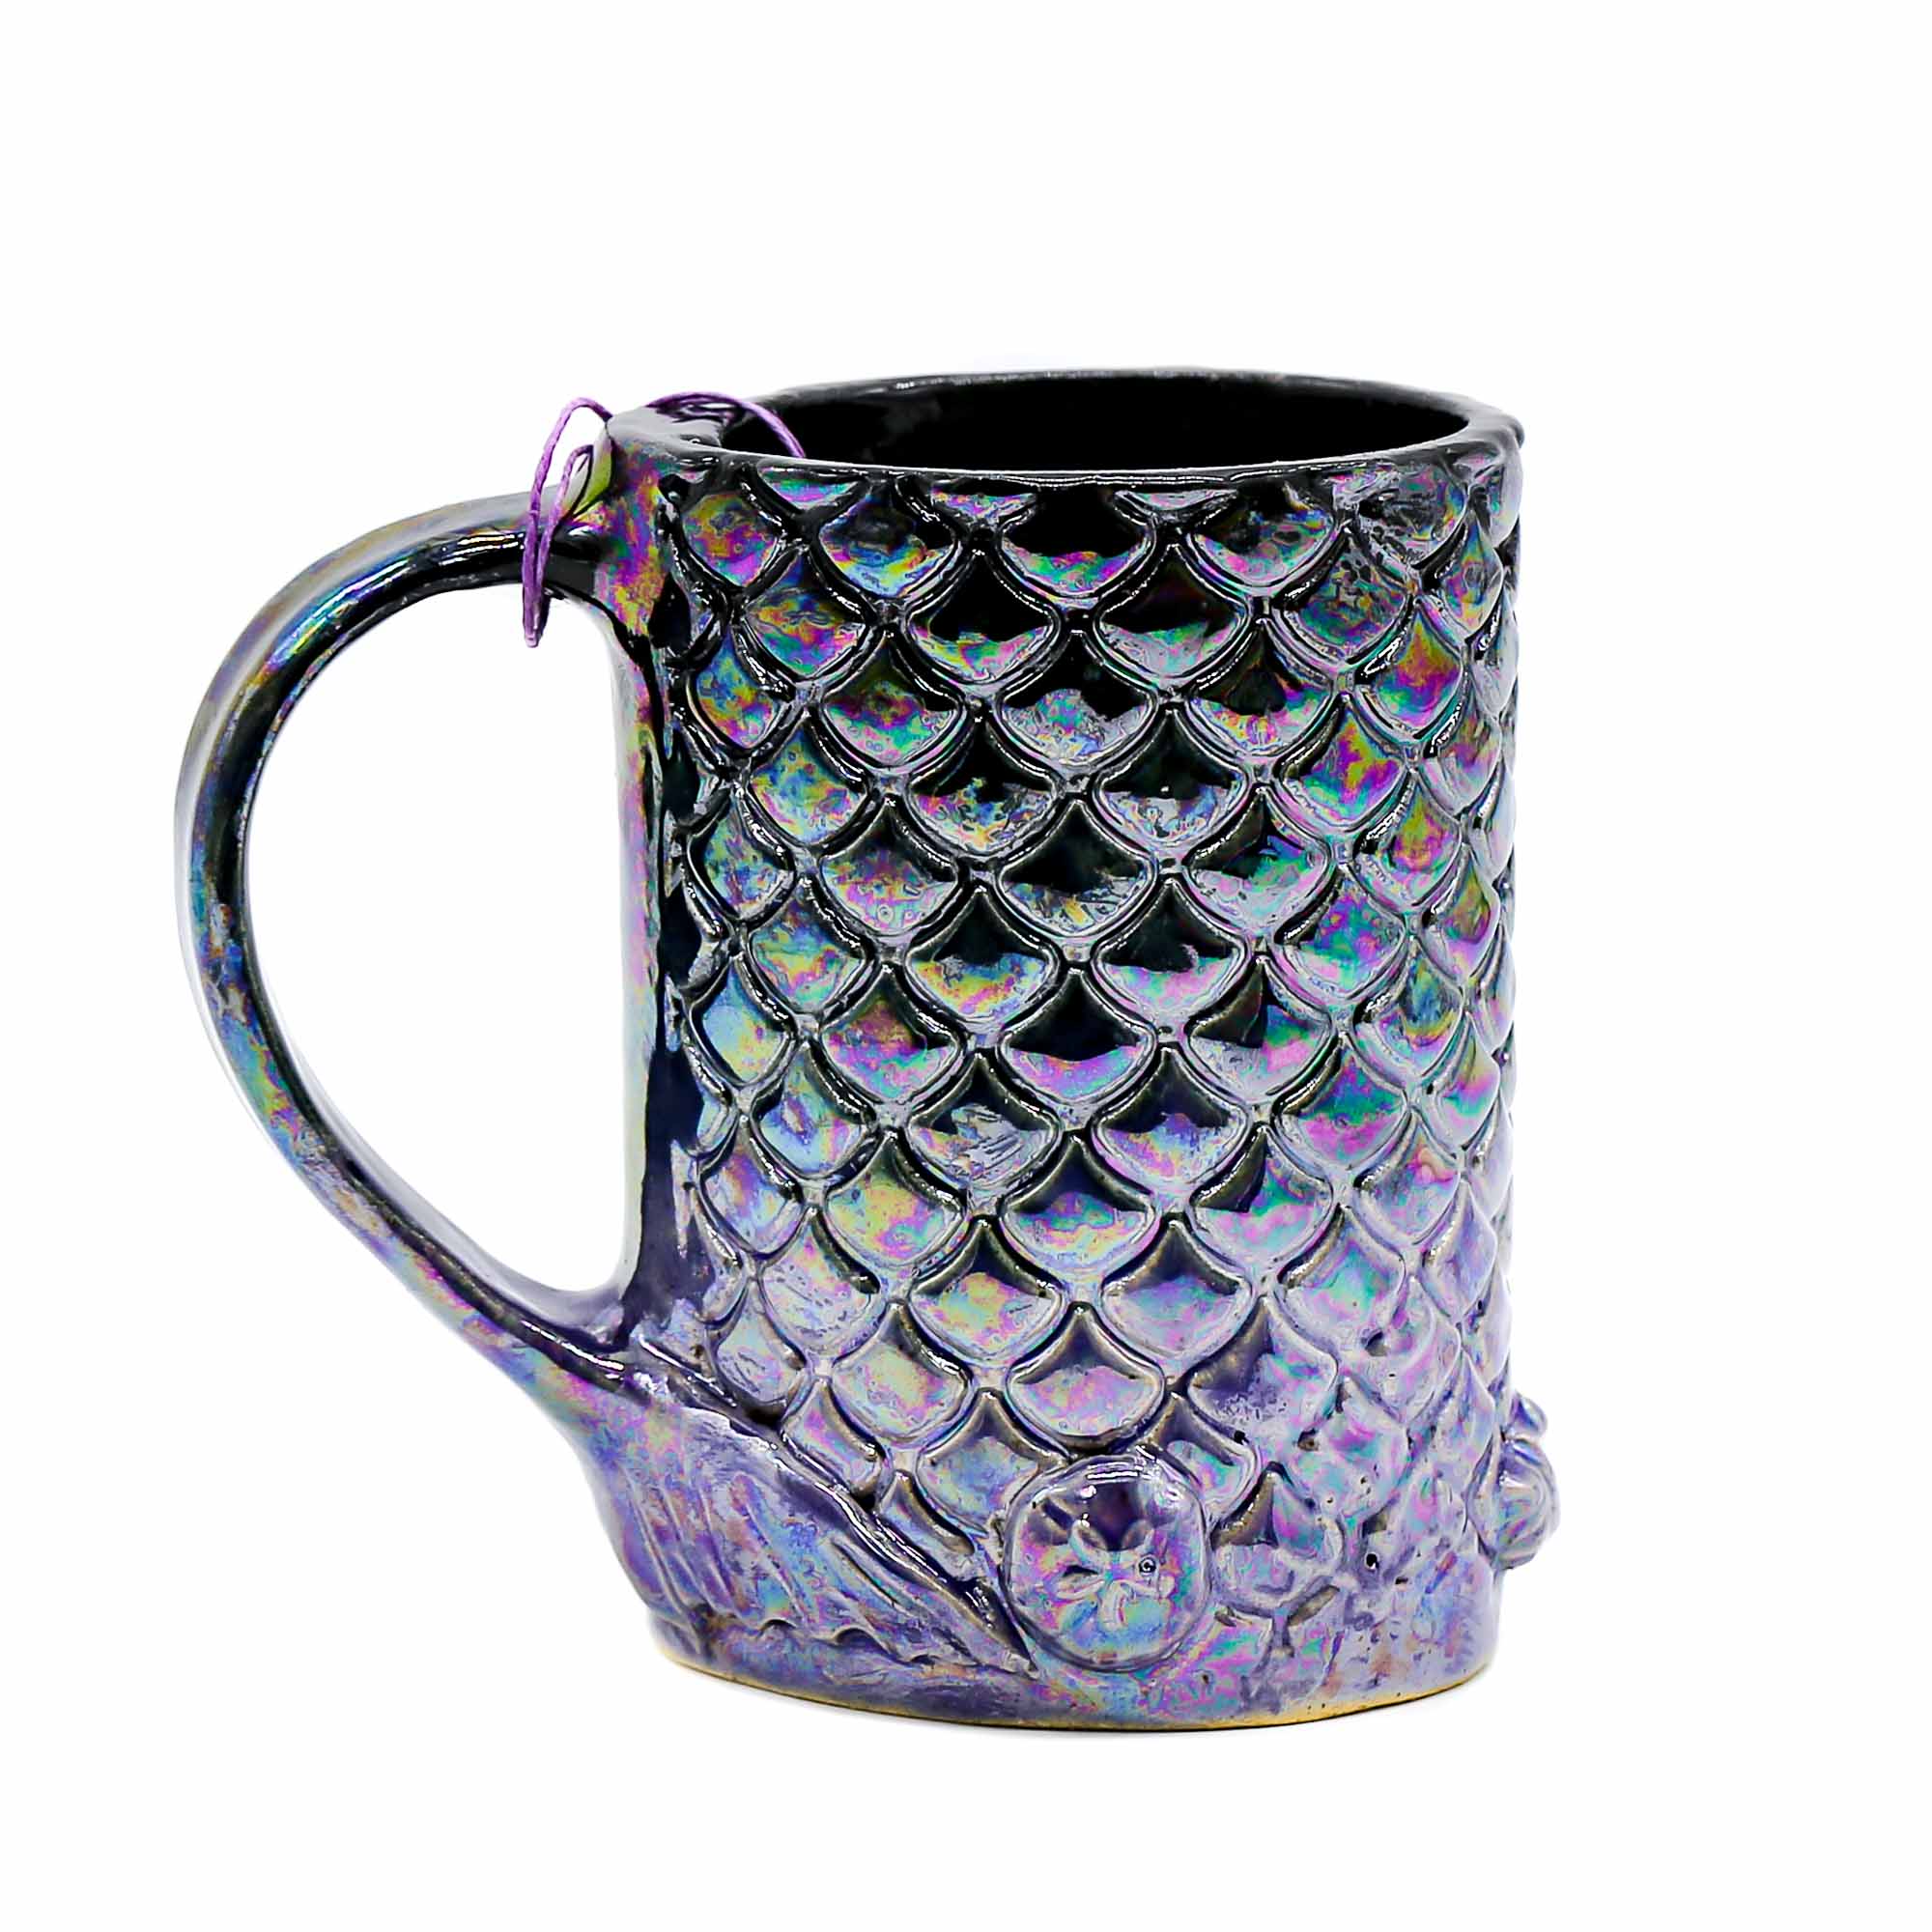 Wildfire Ceramics - Dark Mermaid Mug #5 - Mortise And Tenon